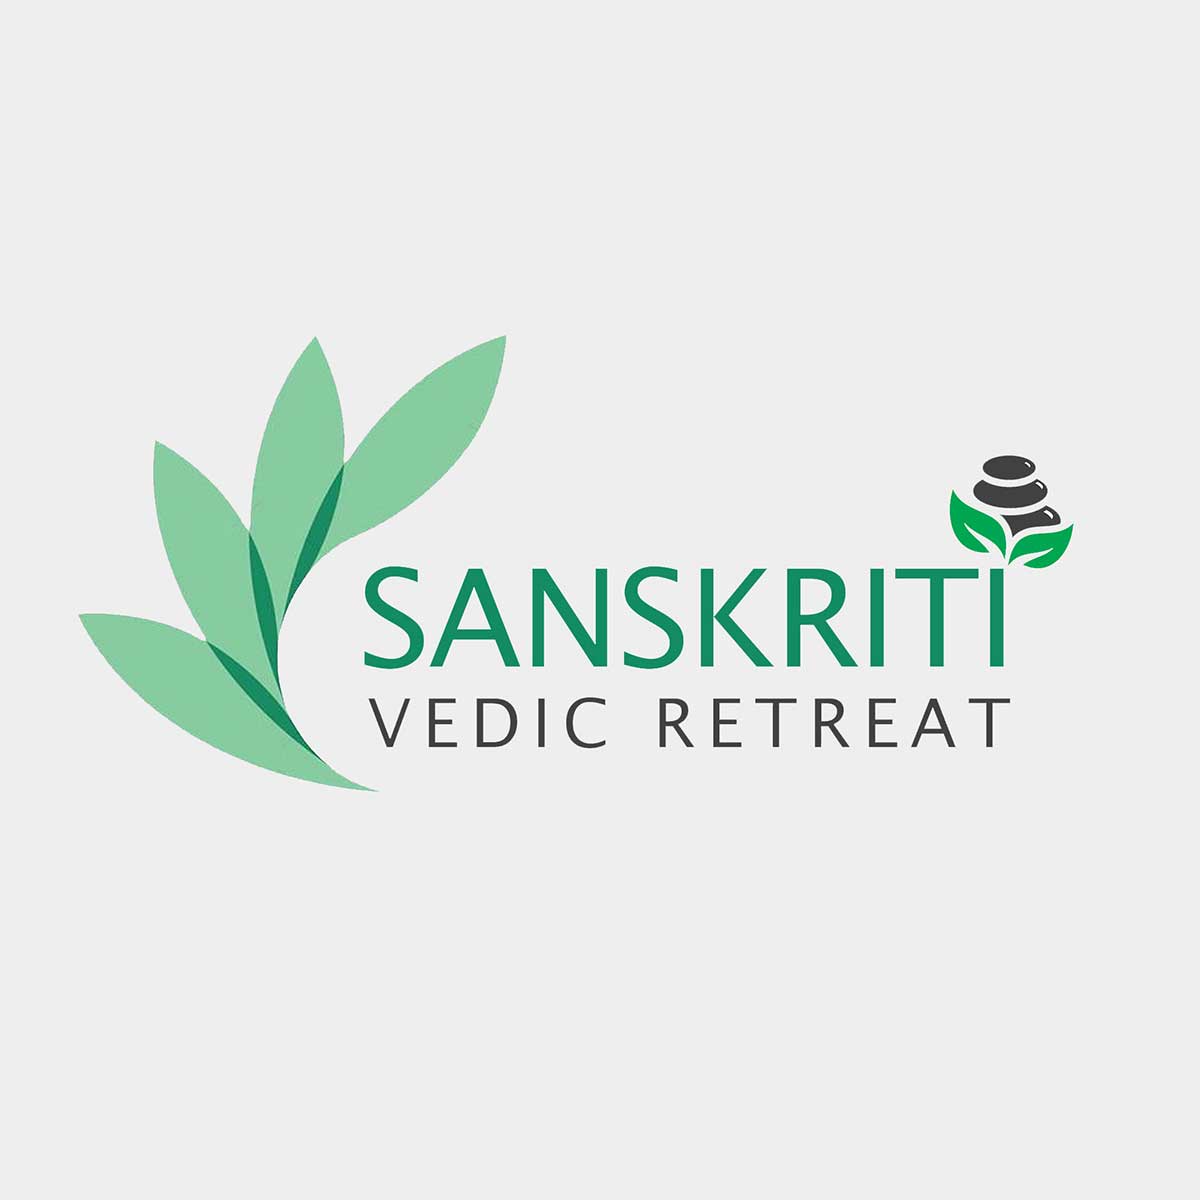 (c) Sanskritivedicretreat.com